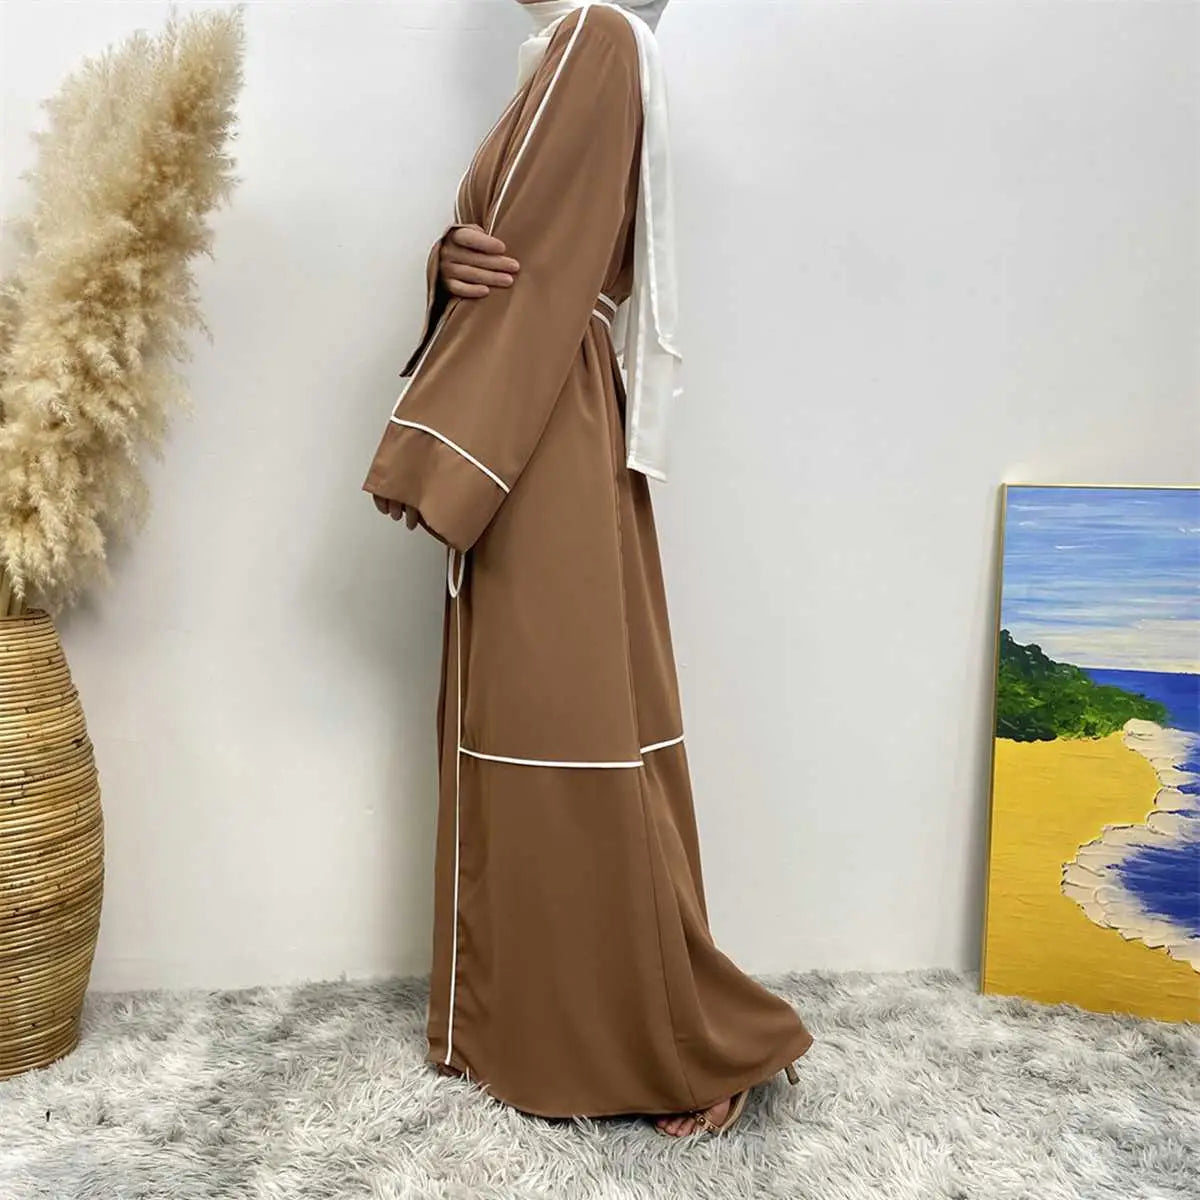 Muslim Women Stripe Open Cardigan Abaya Dress